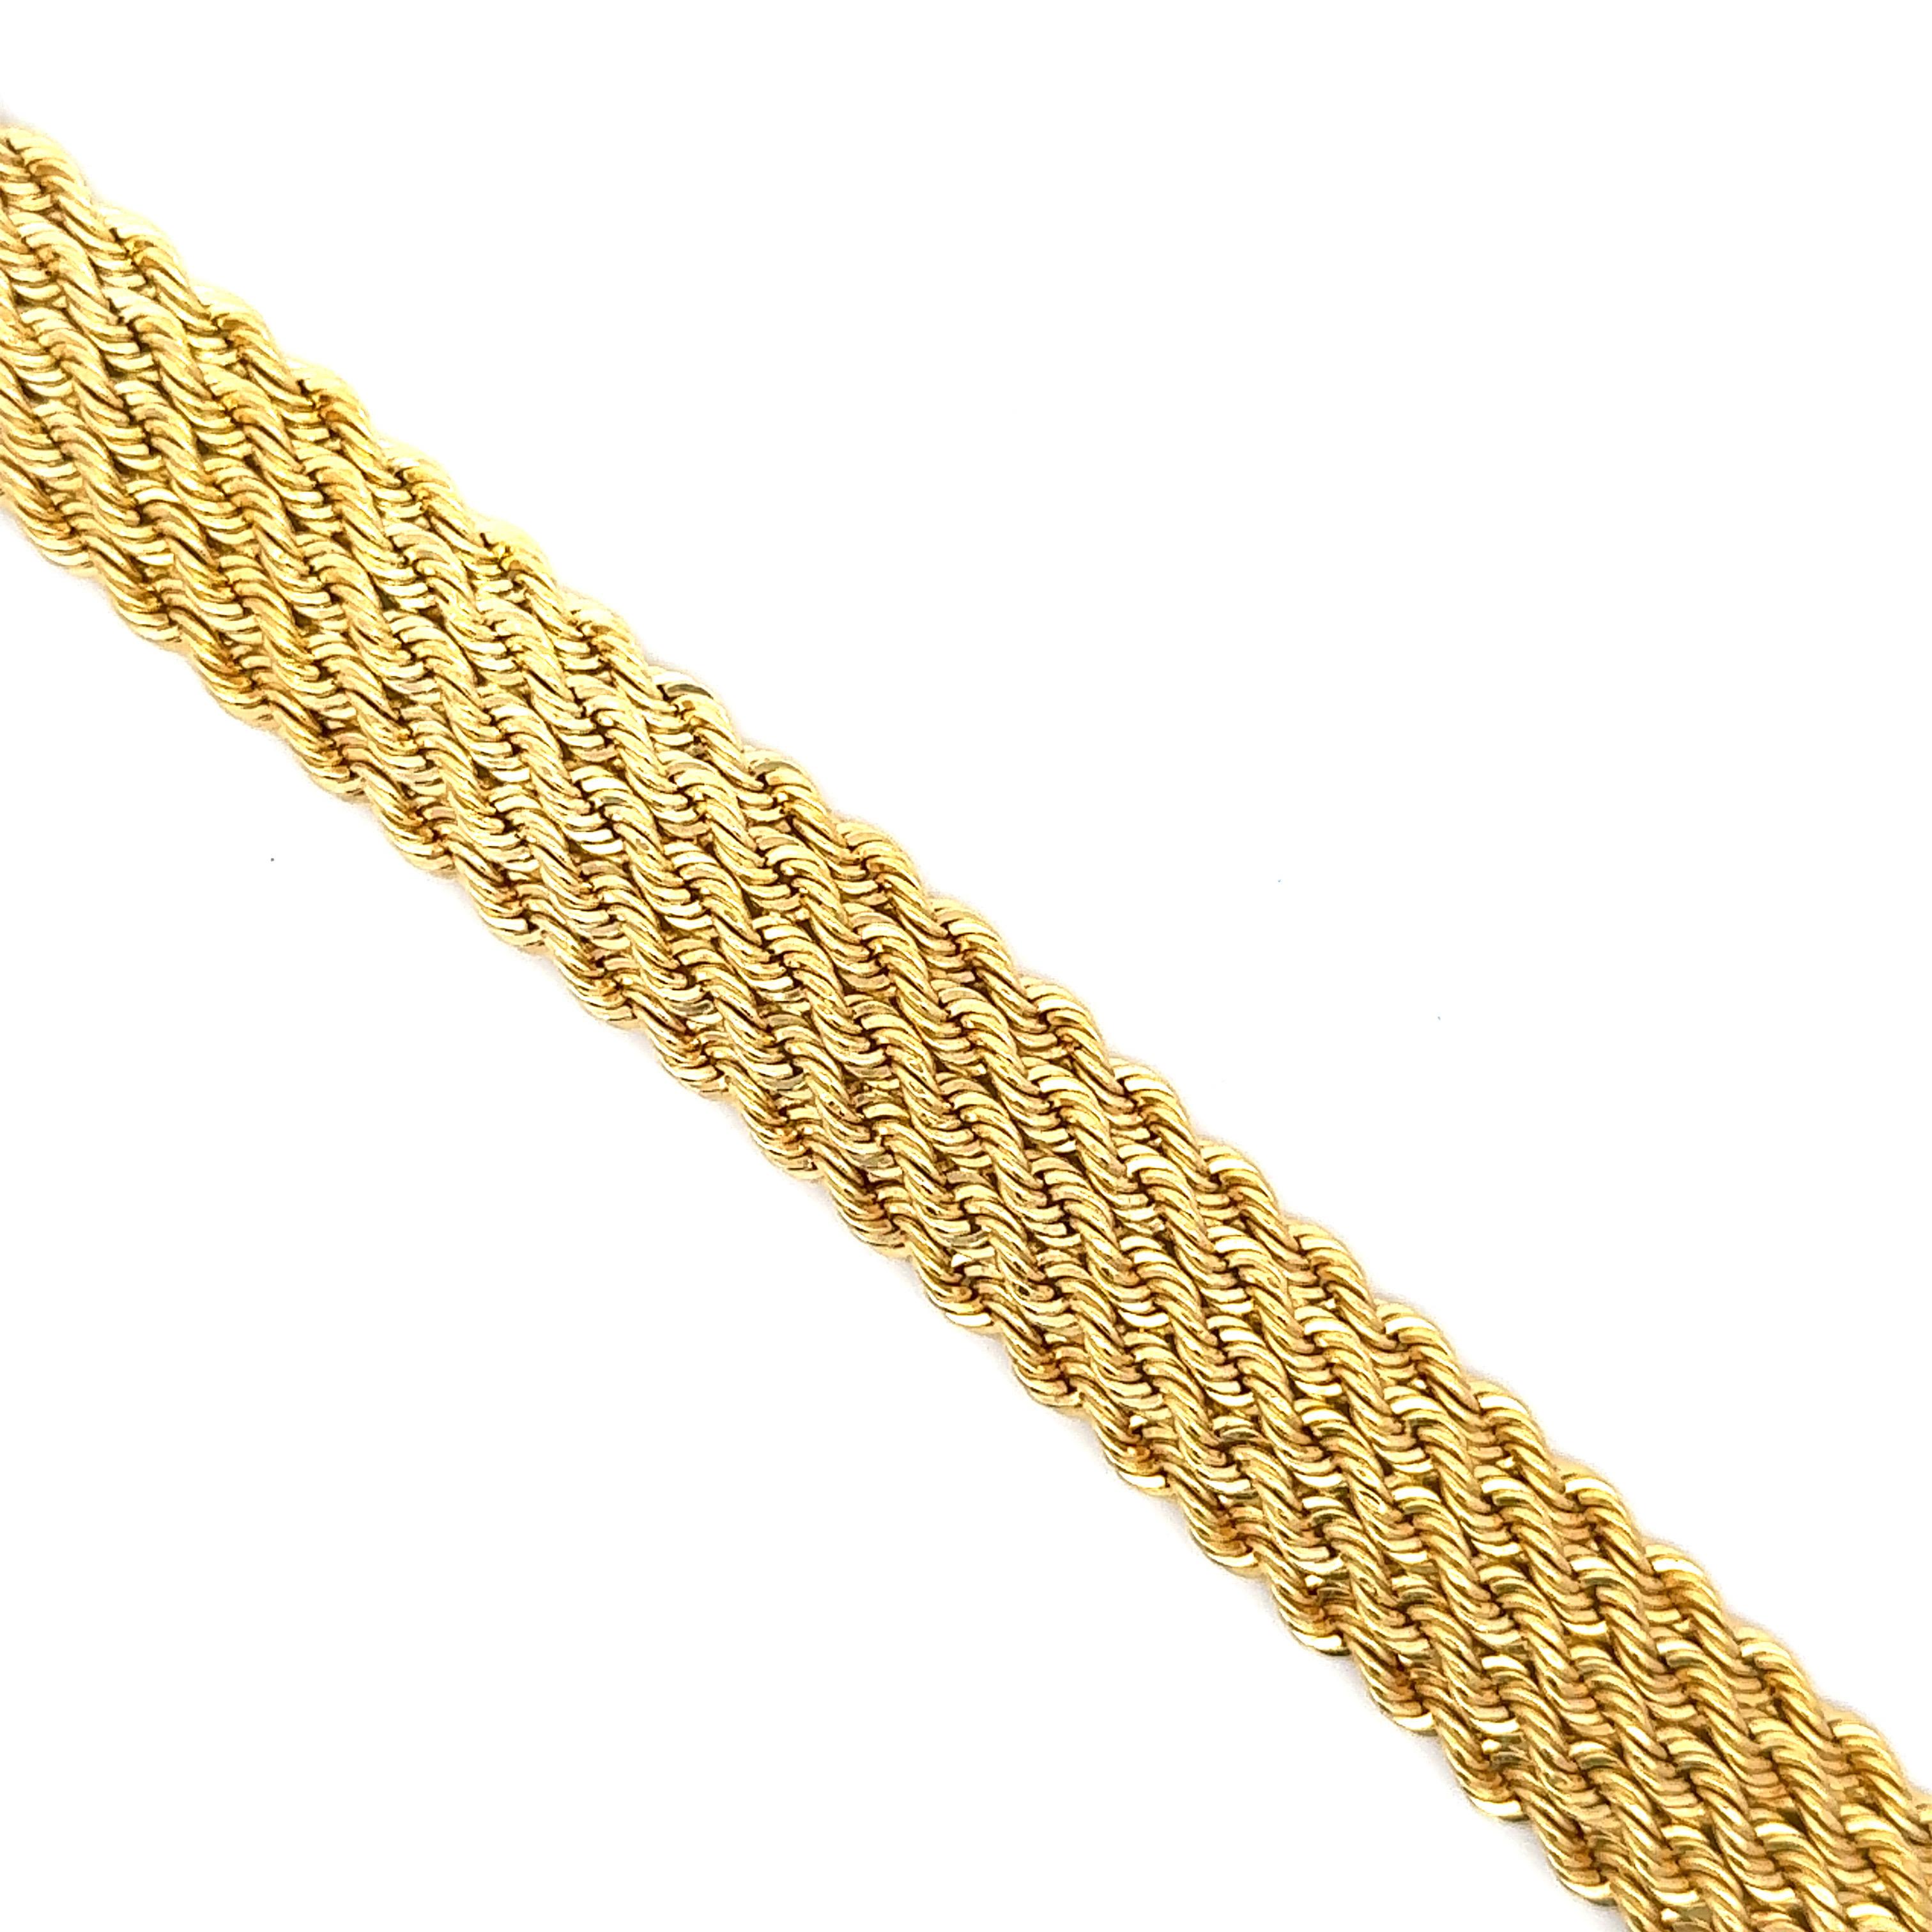 14 Karat Yellow Gold bracelet featuring a braided twist motif weighing 21.1 grams. 
